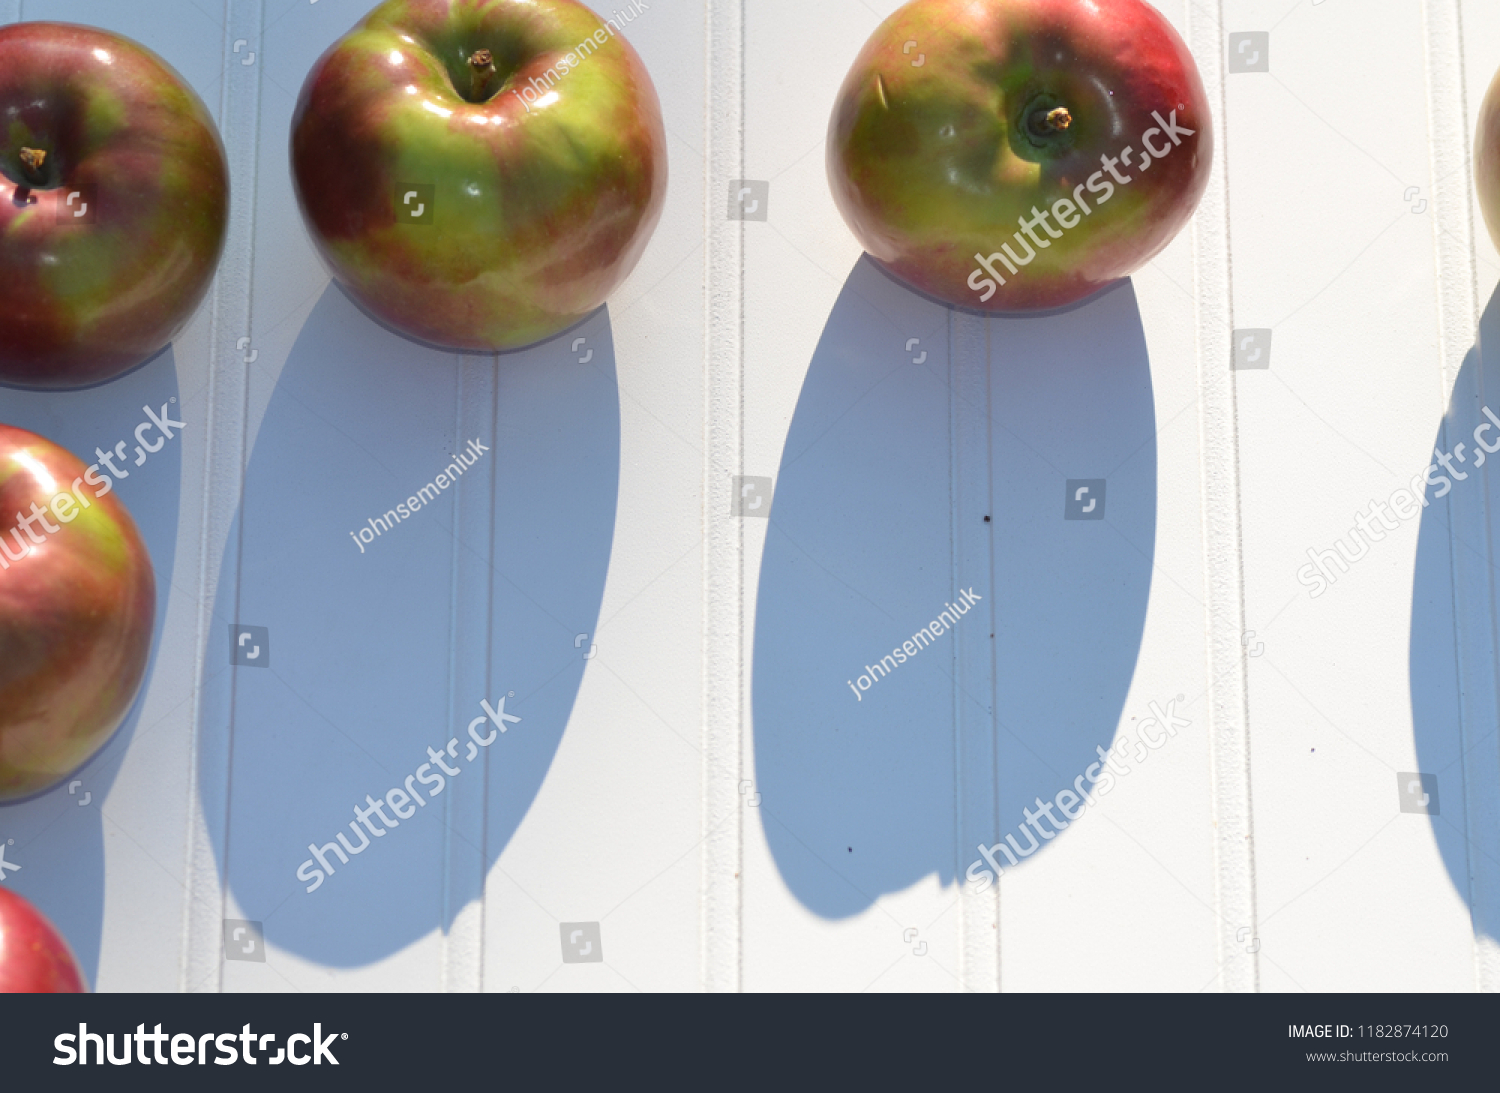 Imac apple for sale